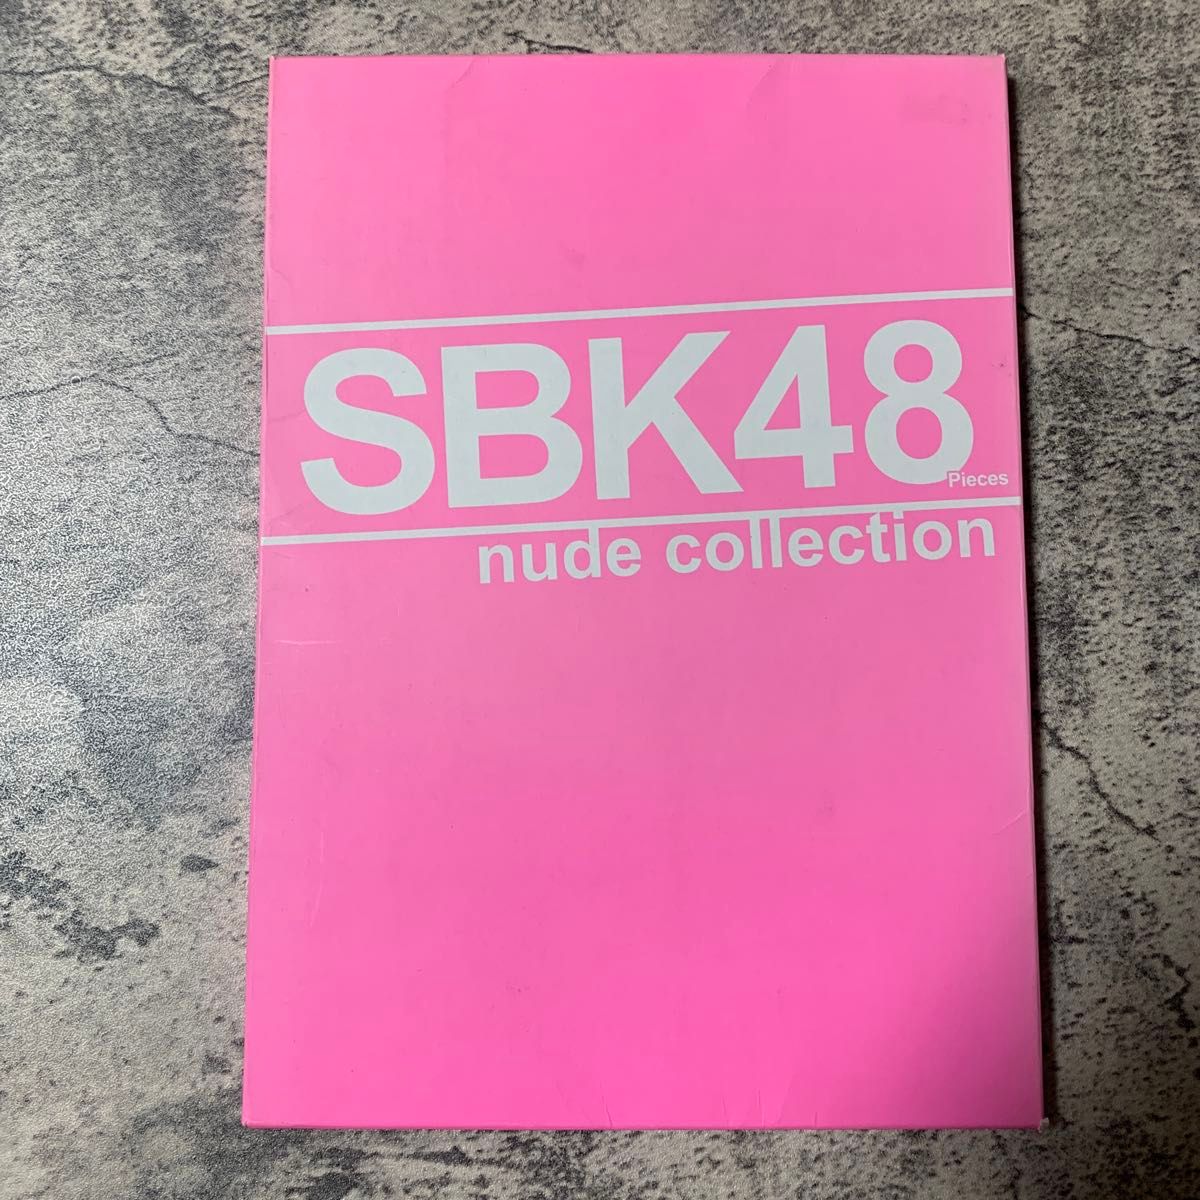 SBK48 pieces nude collection